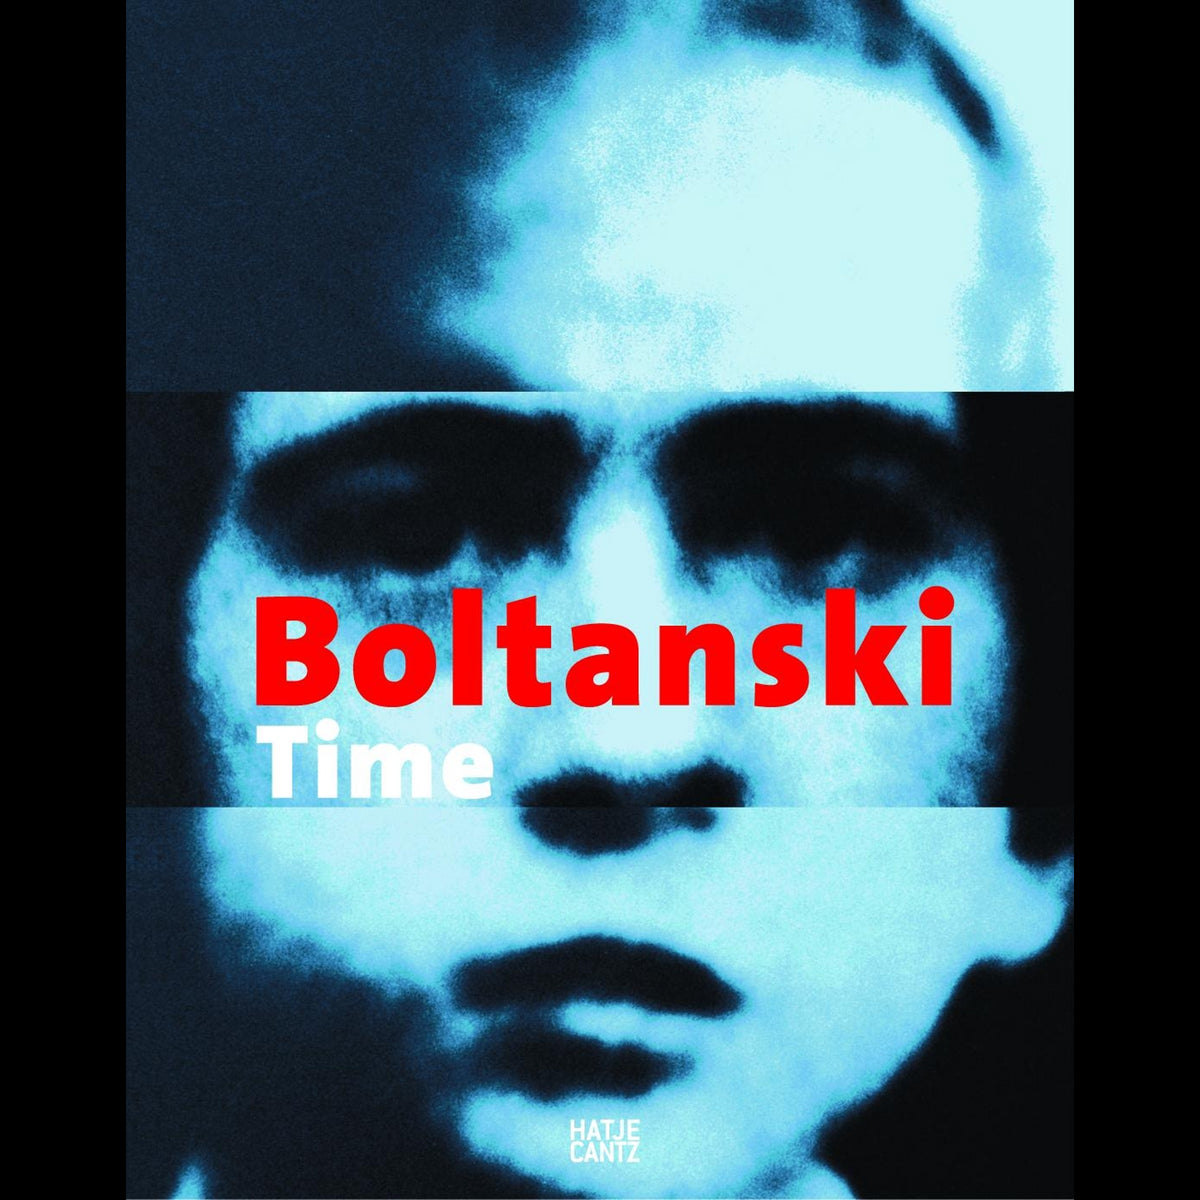 Coverbild Christian Boltanski